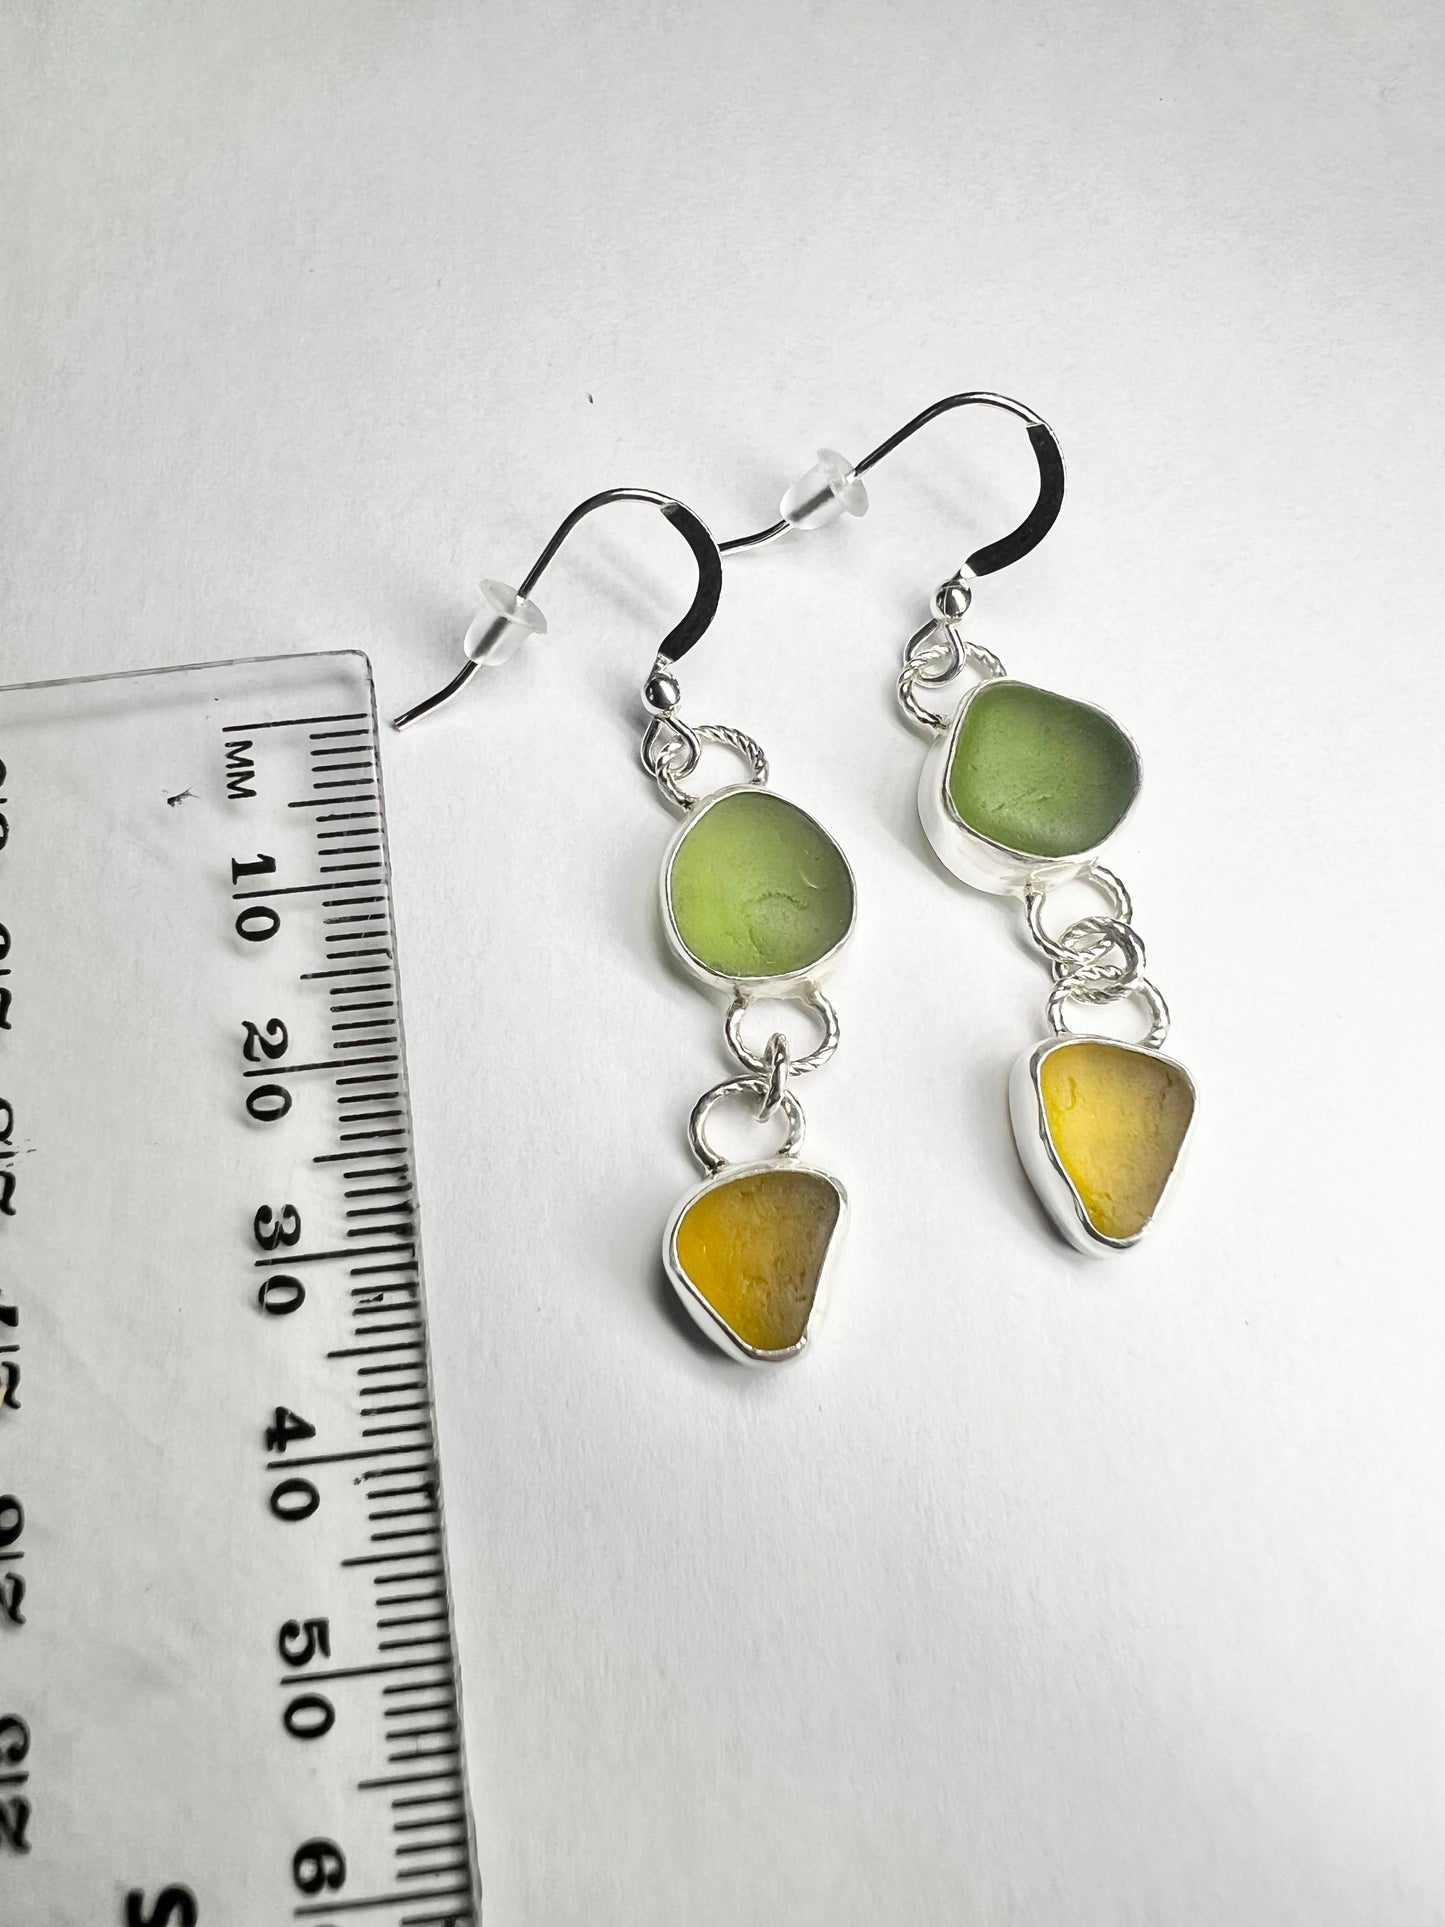 Cornish seaglass dangly earrings